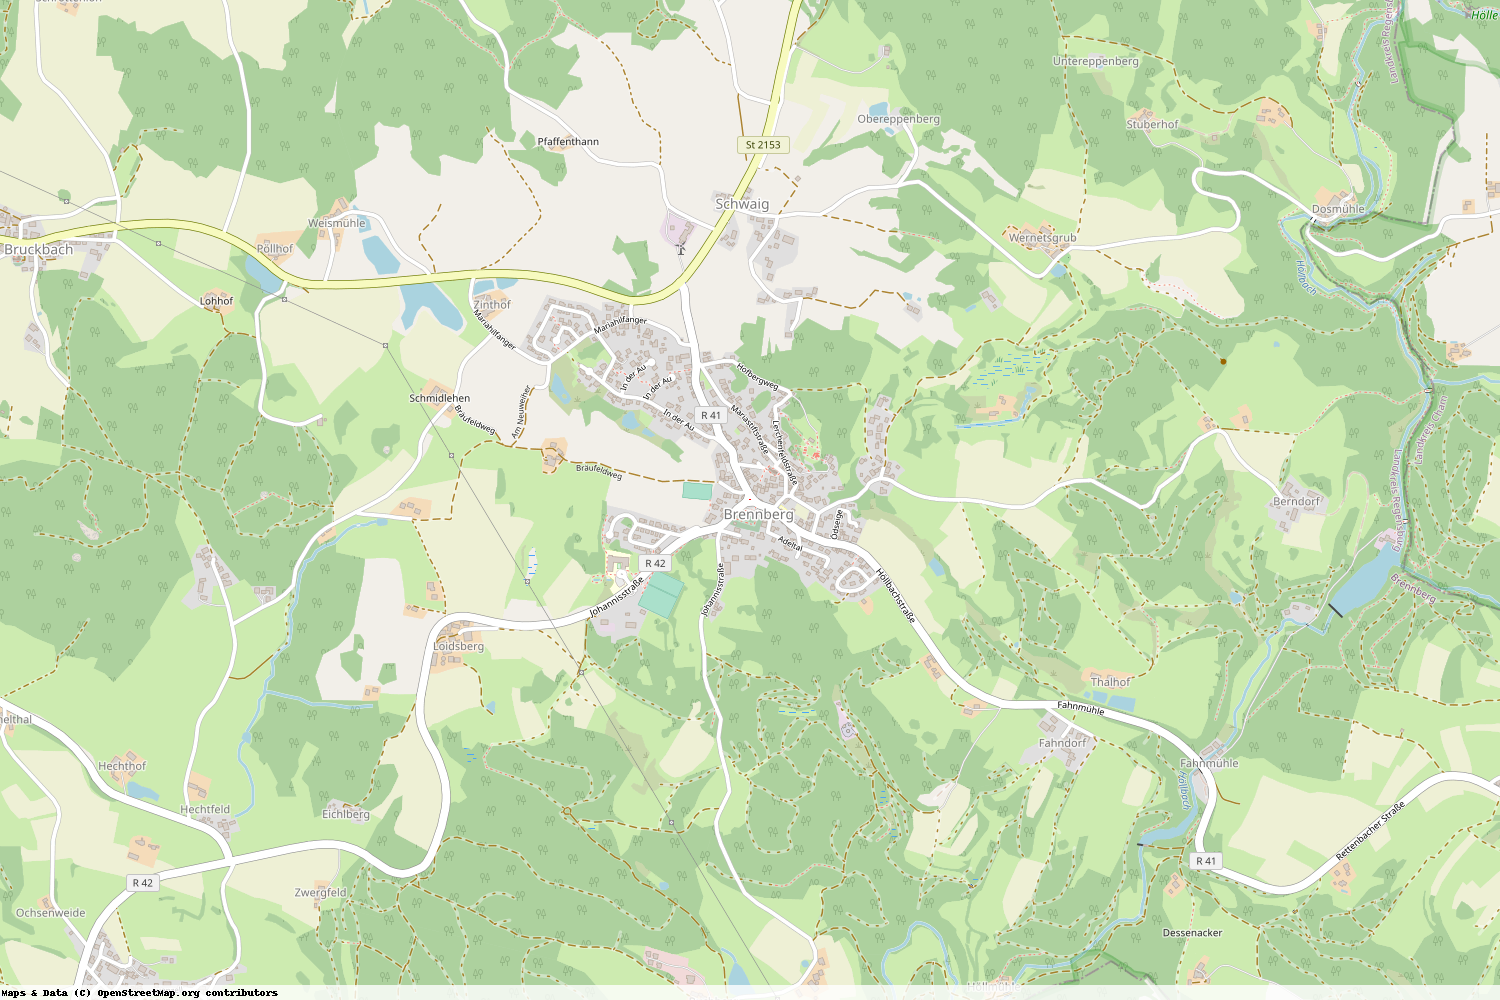 Ist gerade Stromausfall in Bayern - Regensburg - Brennberg?